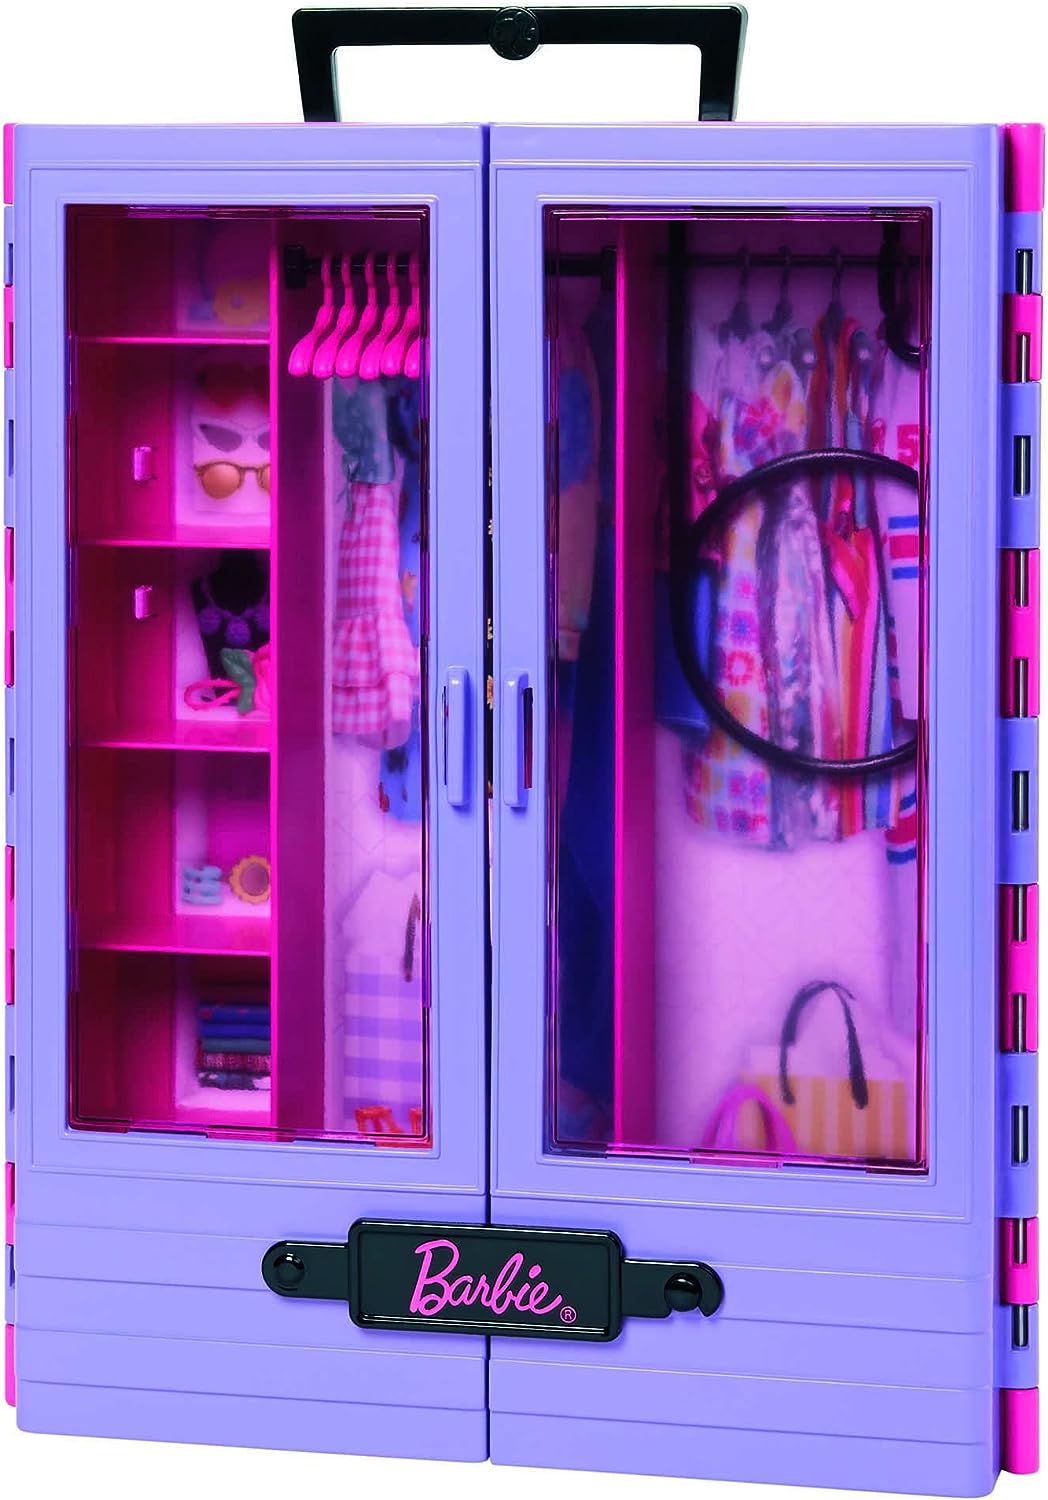 Barbie Fashionistas Ultimate Closet Accessory, Translucent Doors, Storage Space